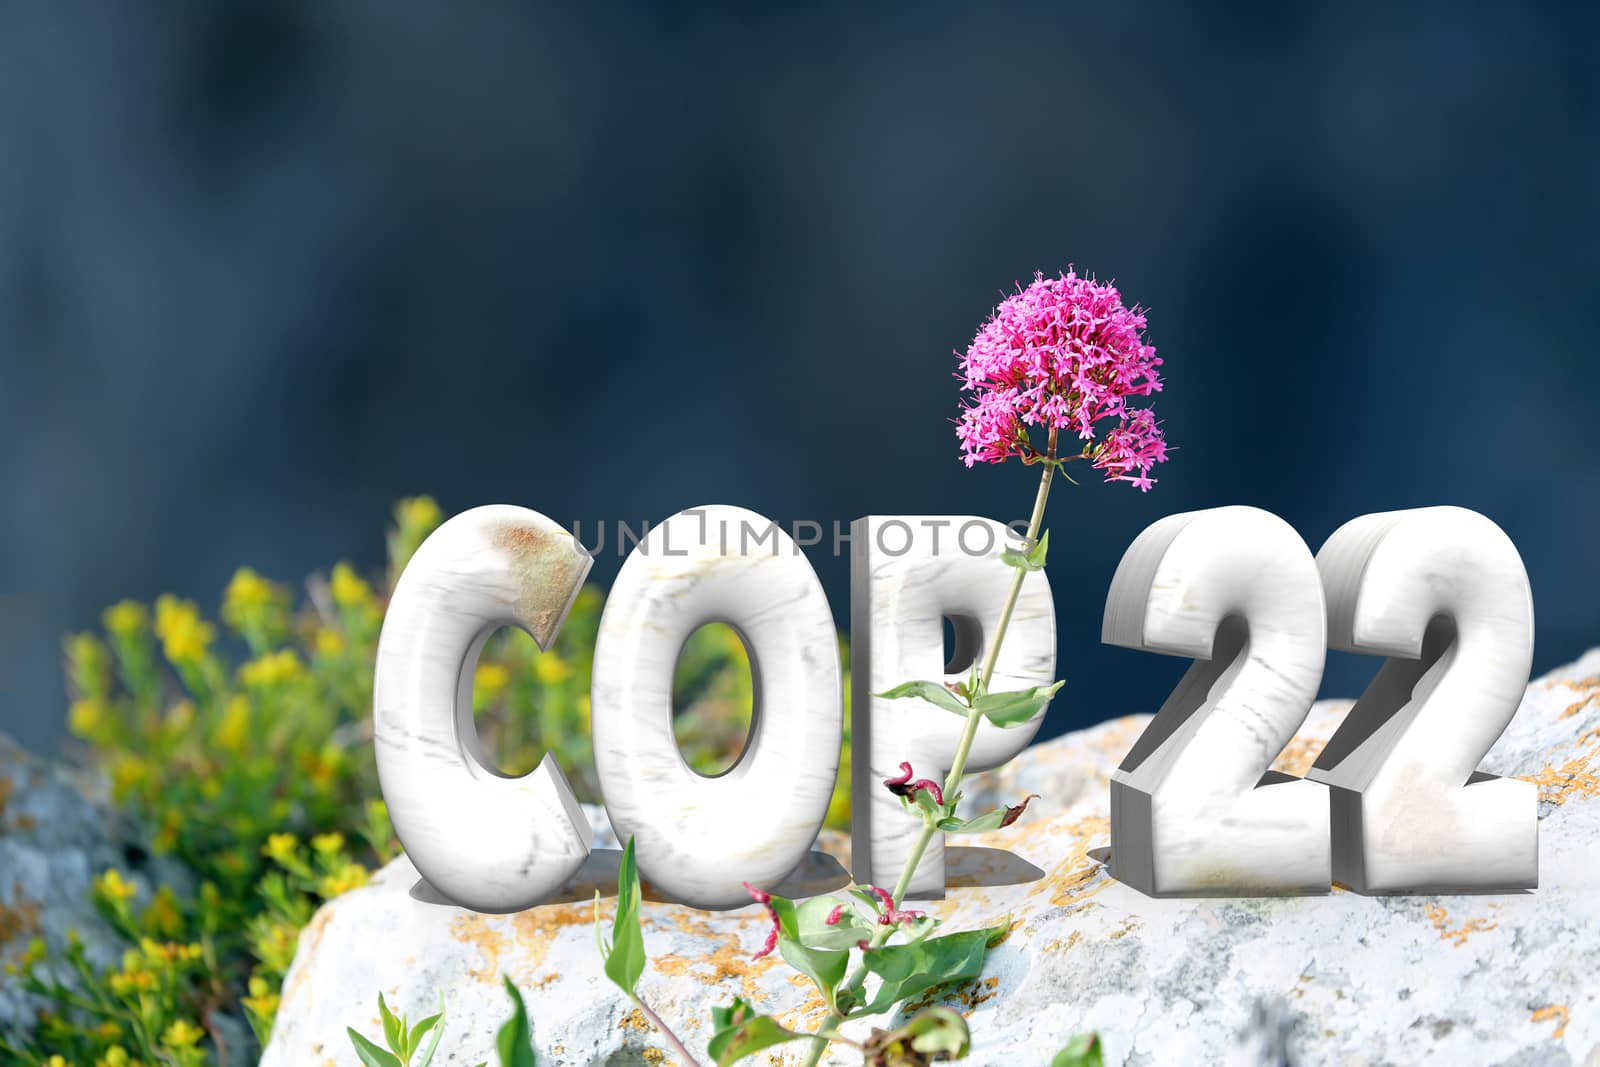 COP 22 by bensib